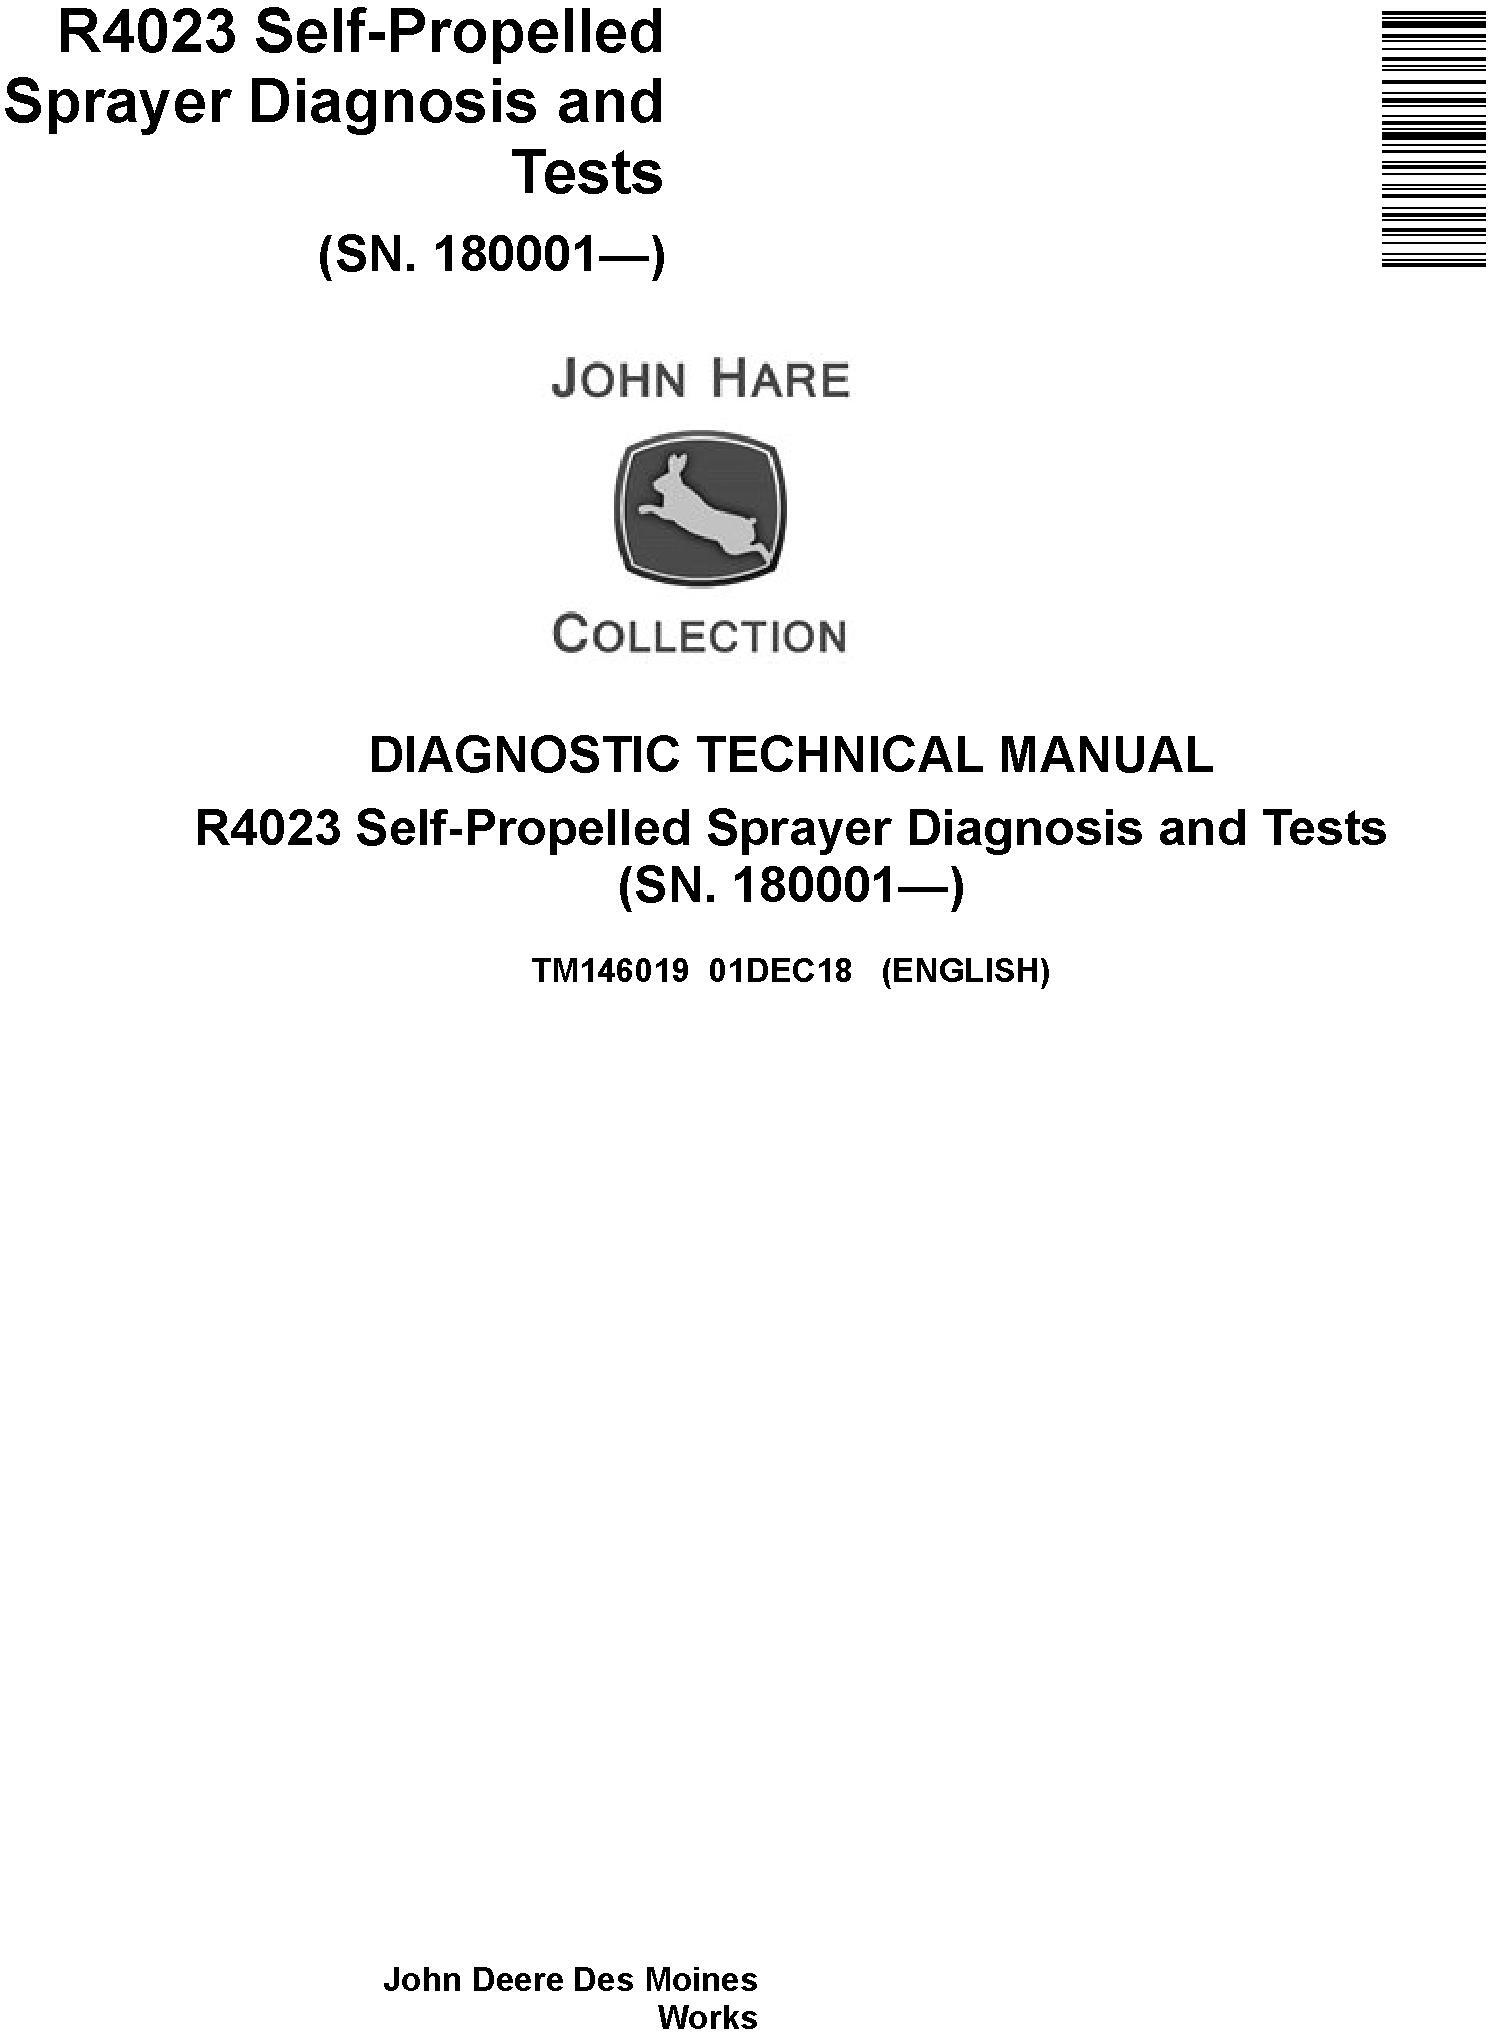 John Deere R4023 Self-Propelled Sprayer Diagnostic Test Technical Manual TM146019